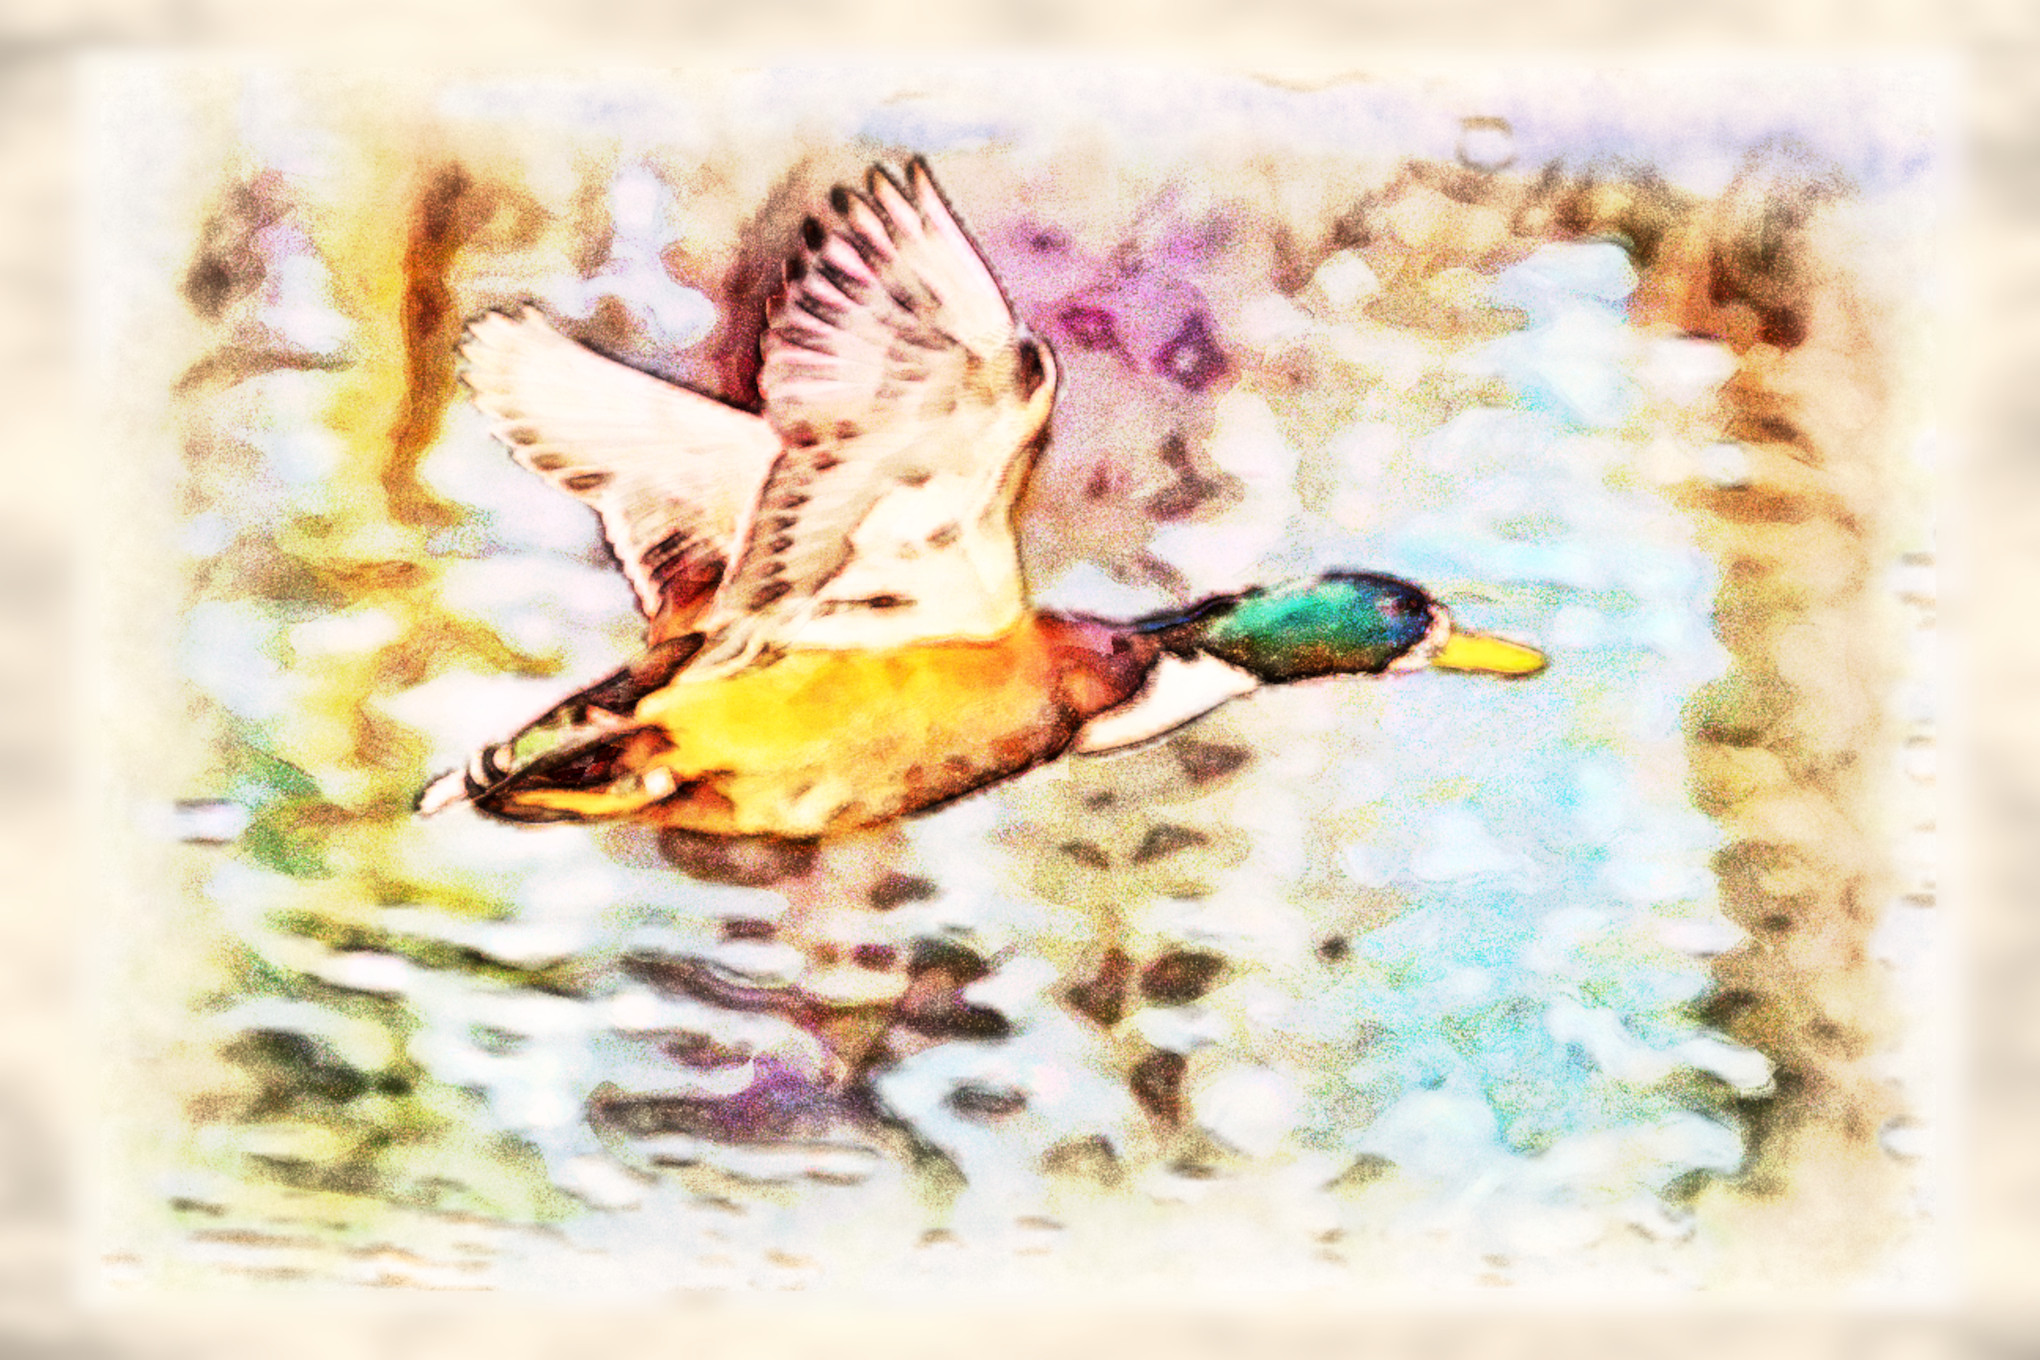 2023-10-02 09-33-42 bird-7802571 with a Watercolor Pastels Effect 2023 (4.0,75.0,32.0,50.0,18.0,8.0,80.0,True,0).jpg